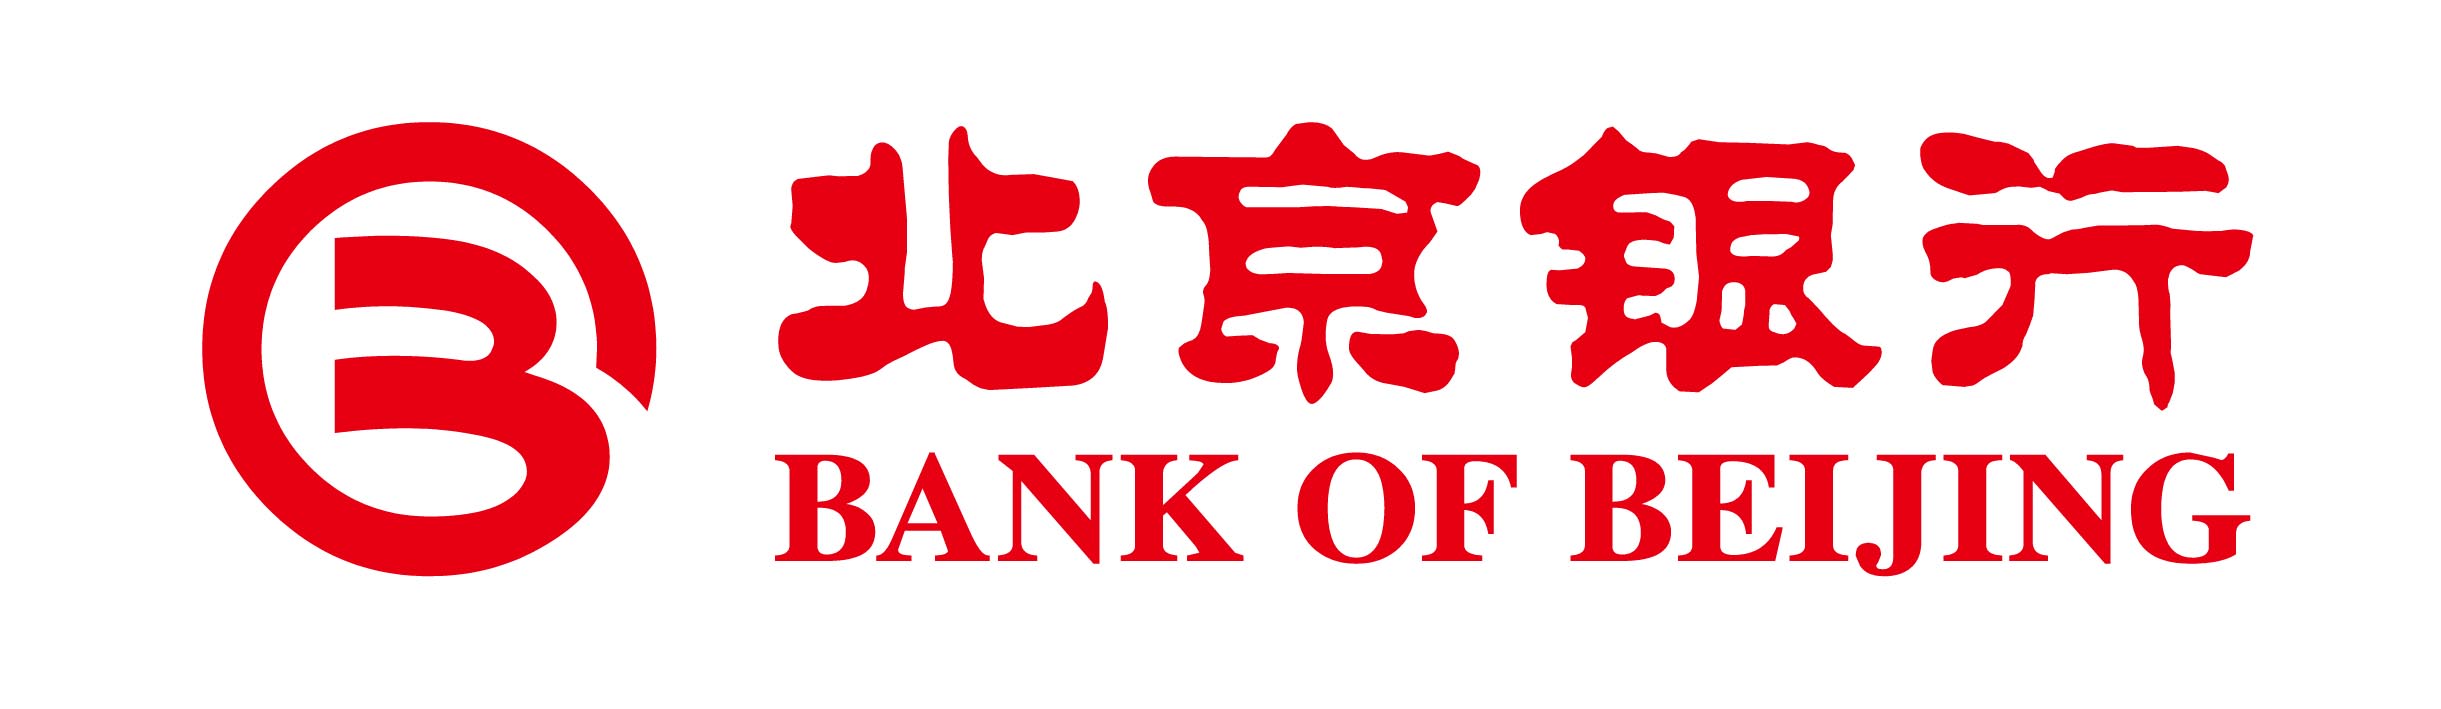 Bank of Beijing Brand Logo